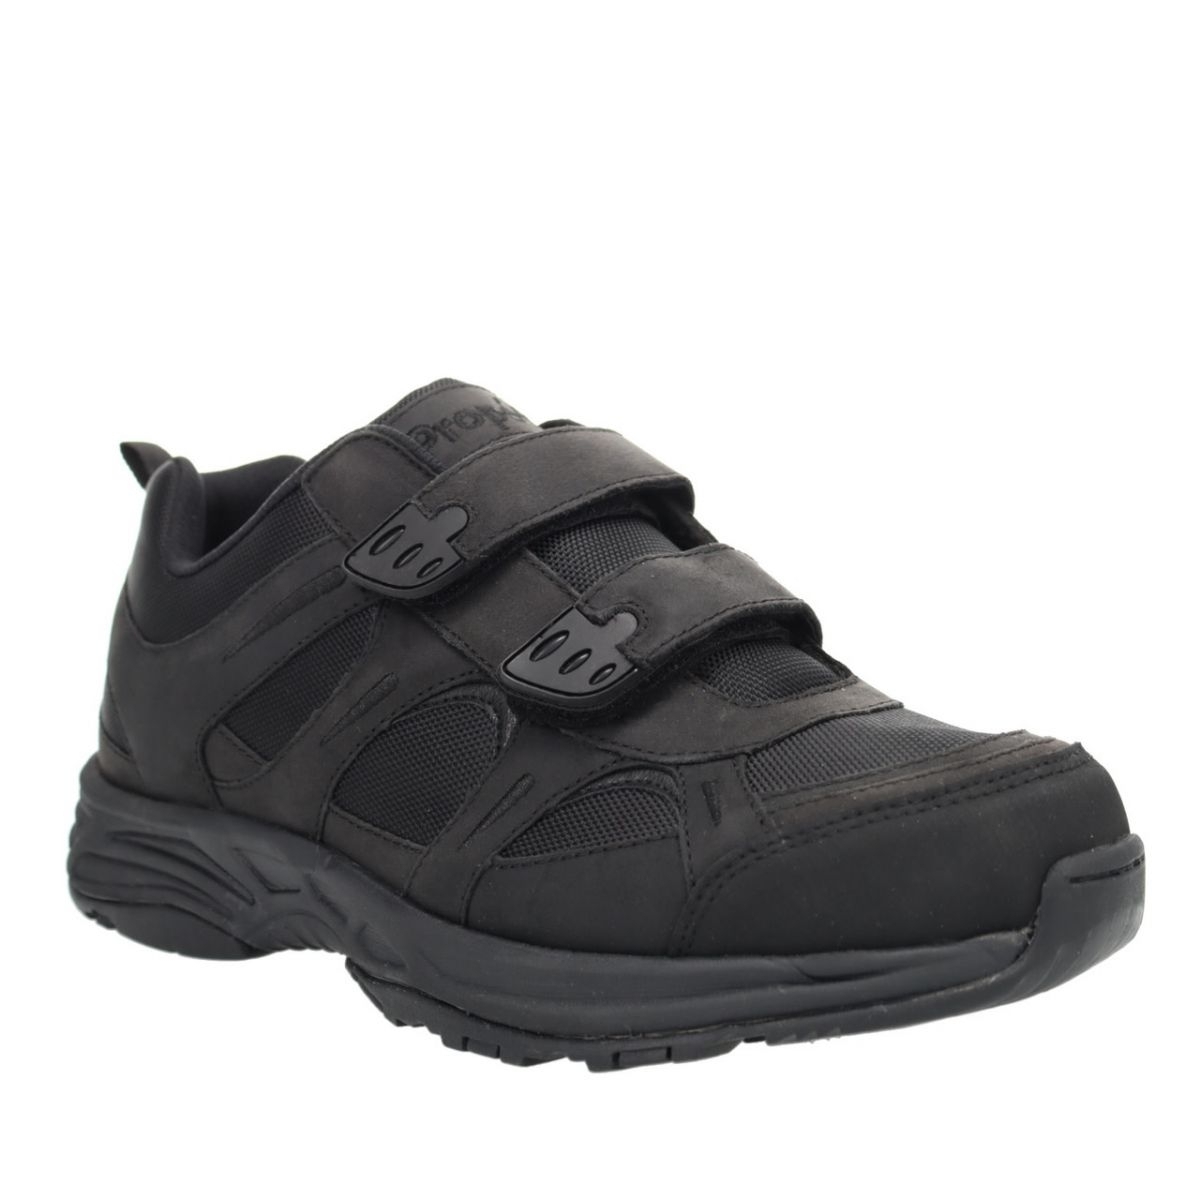 Propet Men's Connelly Strap Walking Shoe All Black - M5502ABL ALL BLACK - ALL BLACK, 10.5 XX-Wide